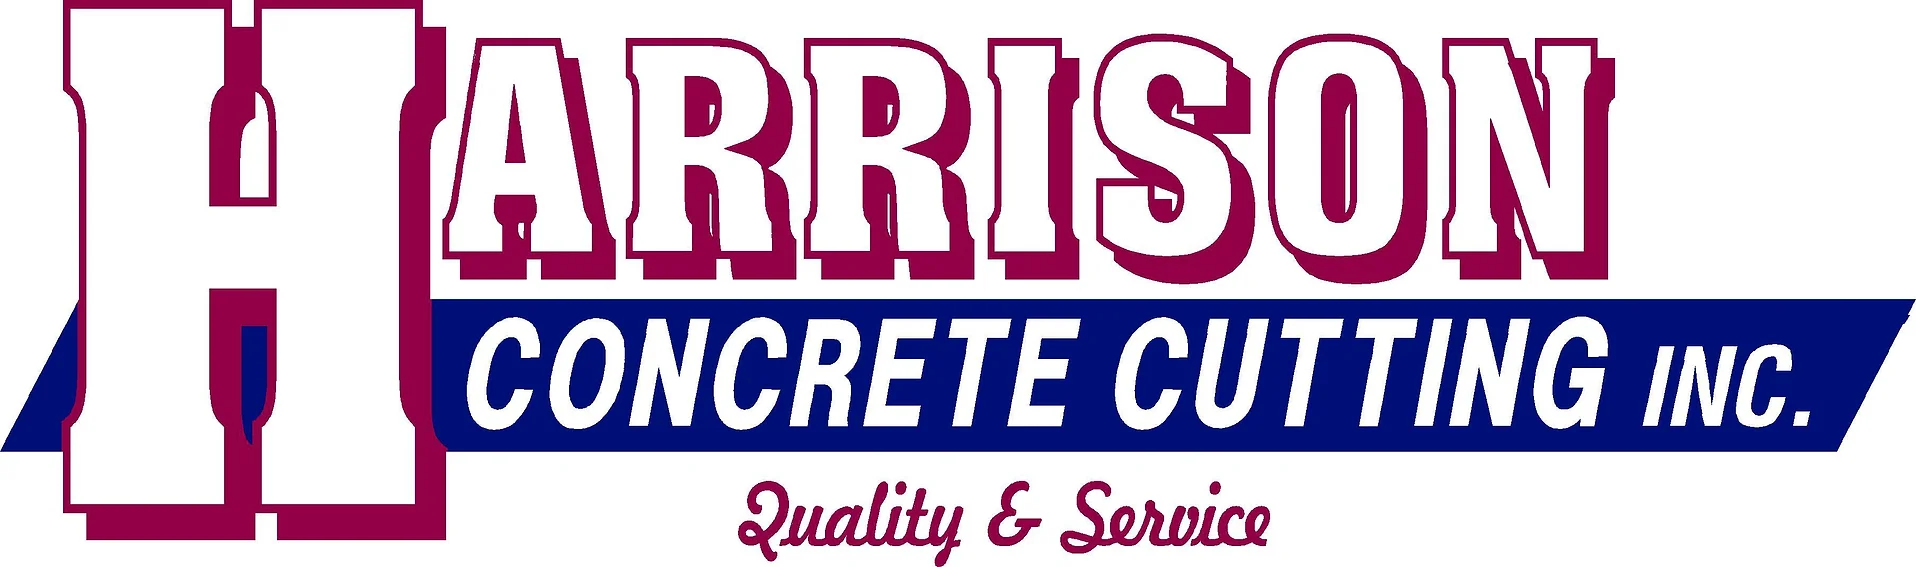 Logo-HarrisonConcrete